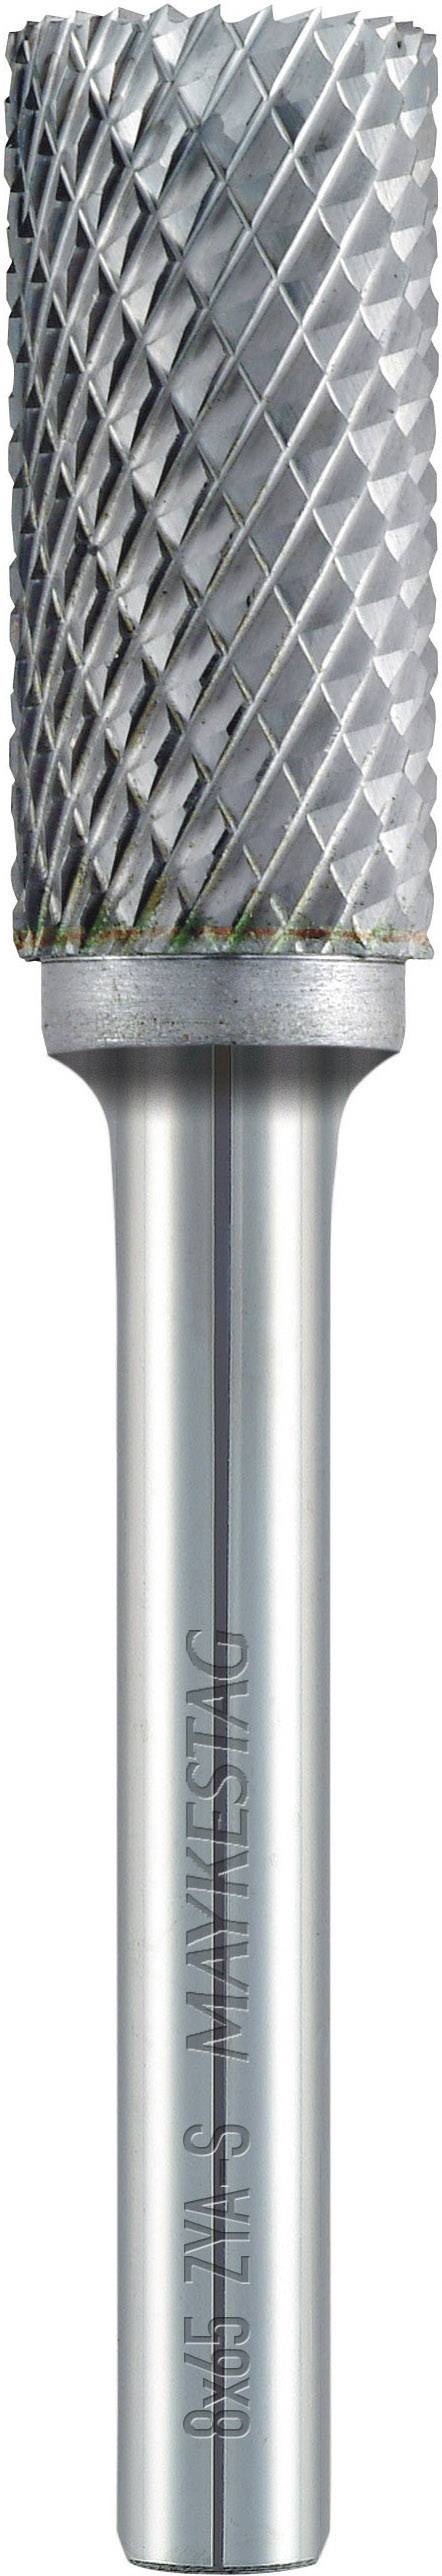 ALPEN Frässtift 6 mm Form A Zylinder (ZYA-S) mit Stirnverzahnung Alpen 778606106100 Hartmetall Schaf